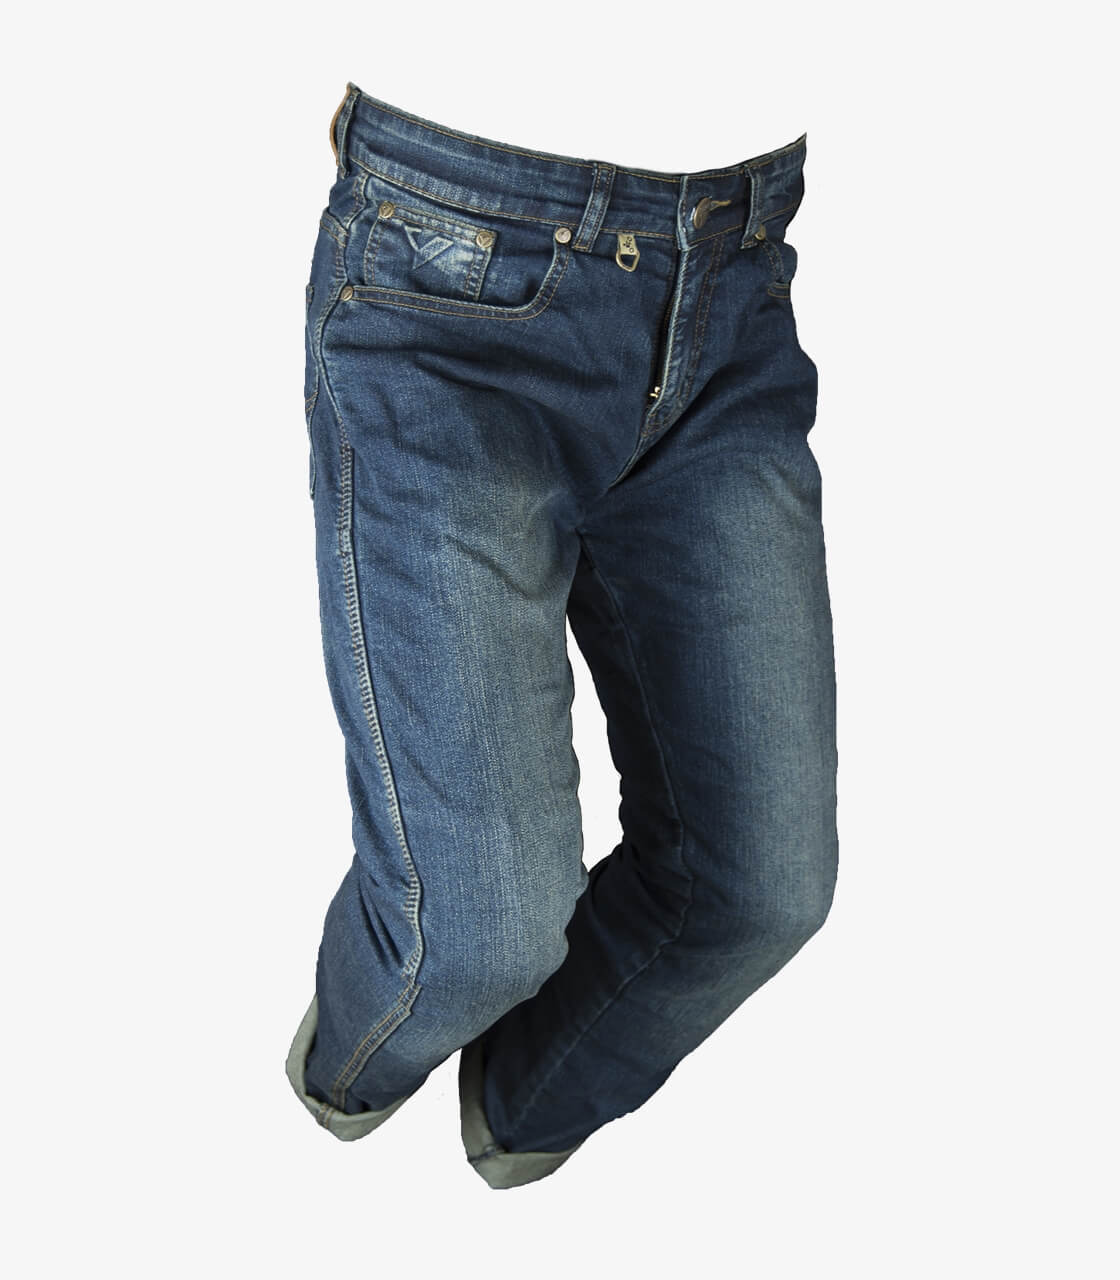 Pantalones tejanos de Hombre By City Camaleon azul tejano